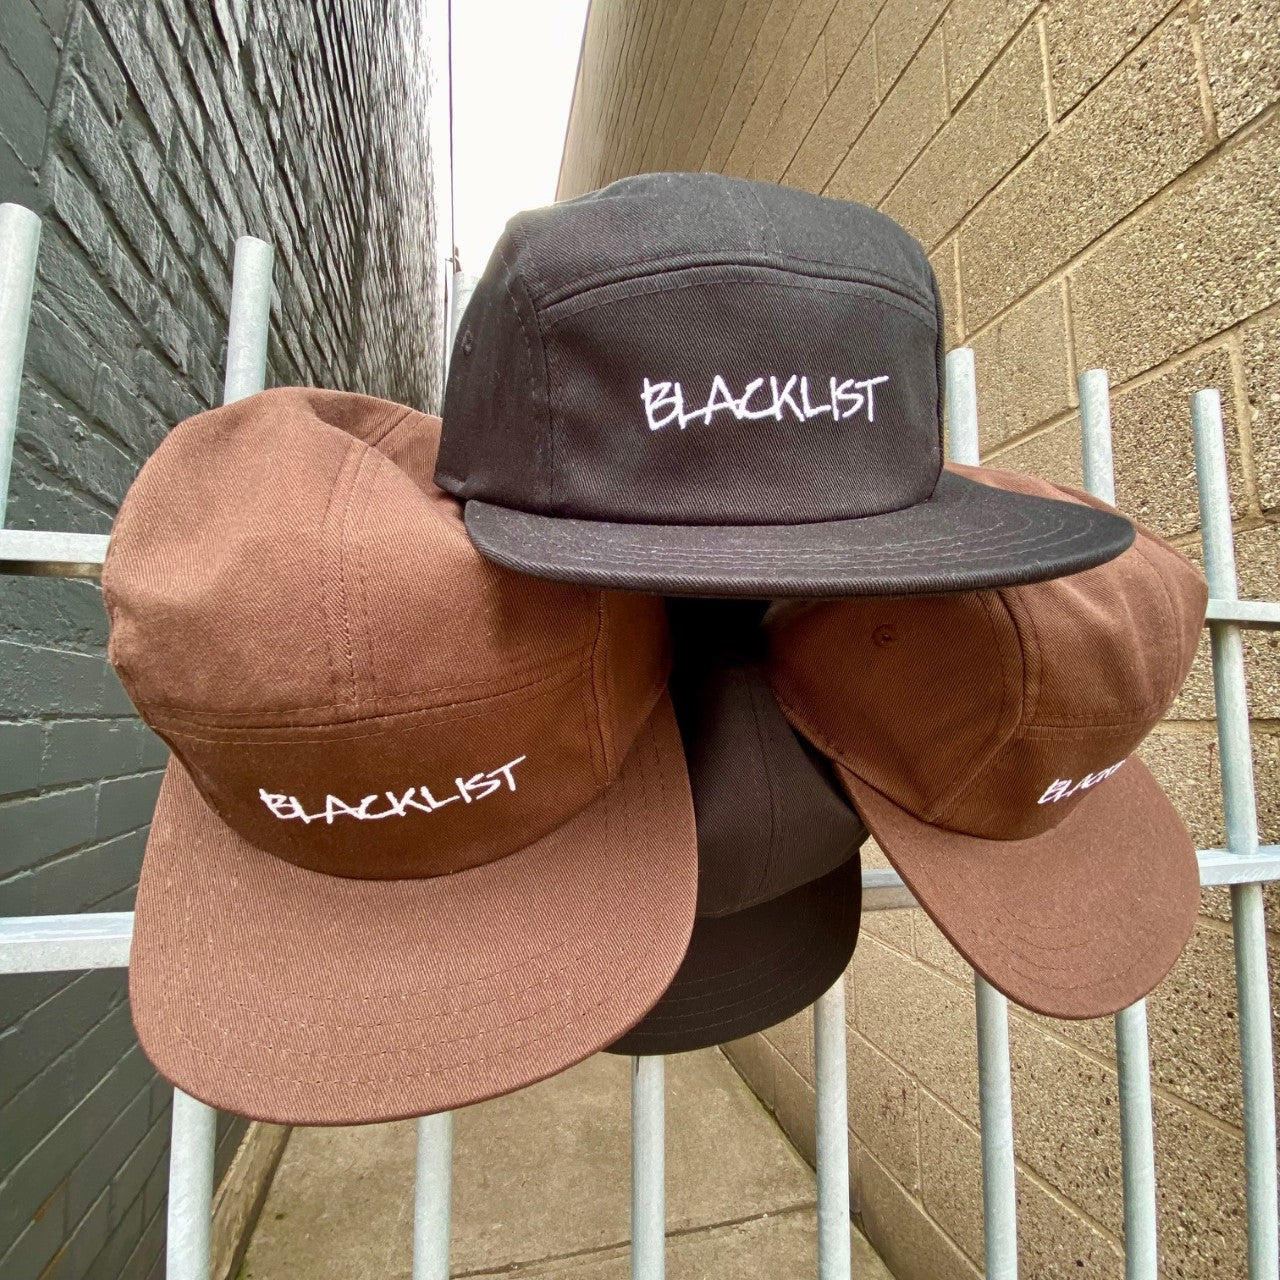 BLACKLISTRIGHTE 5 PANEL RUNNER CAP